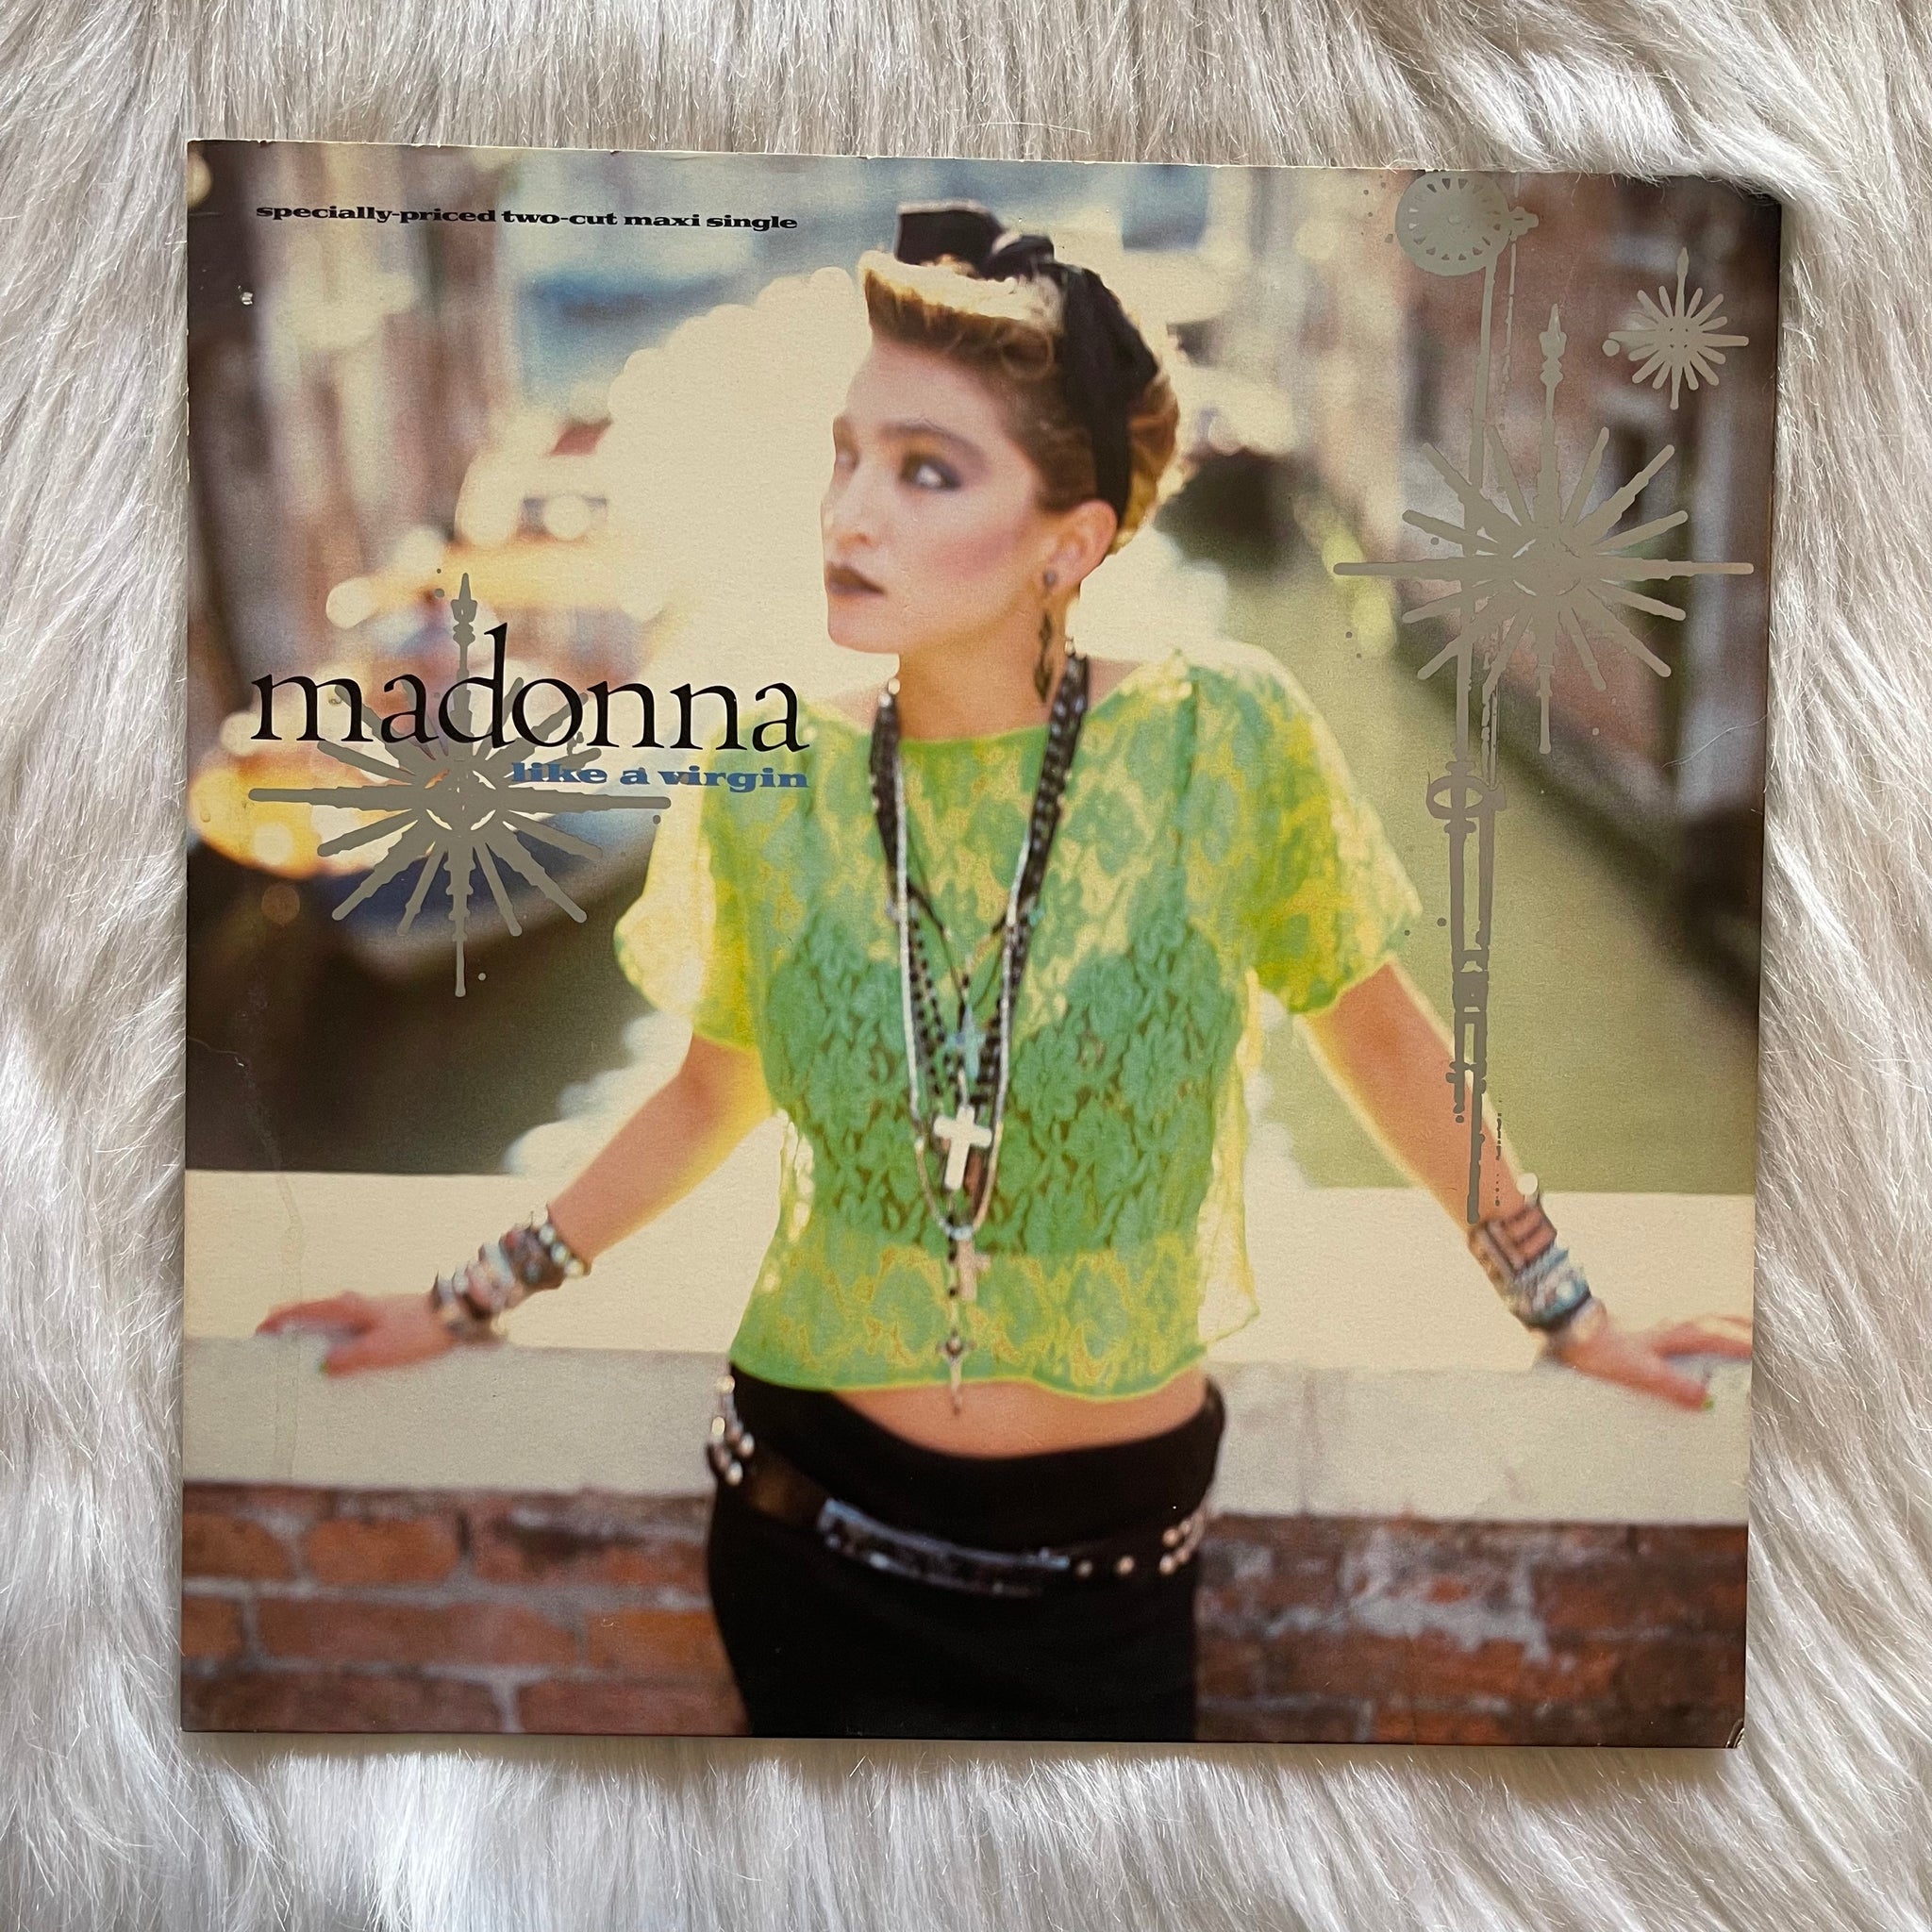 Madonna-Like A Virgin Two Cut Maxi Single